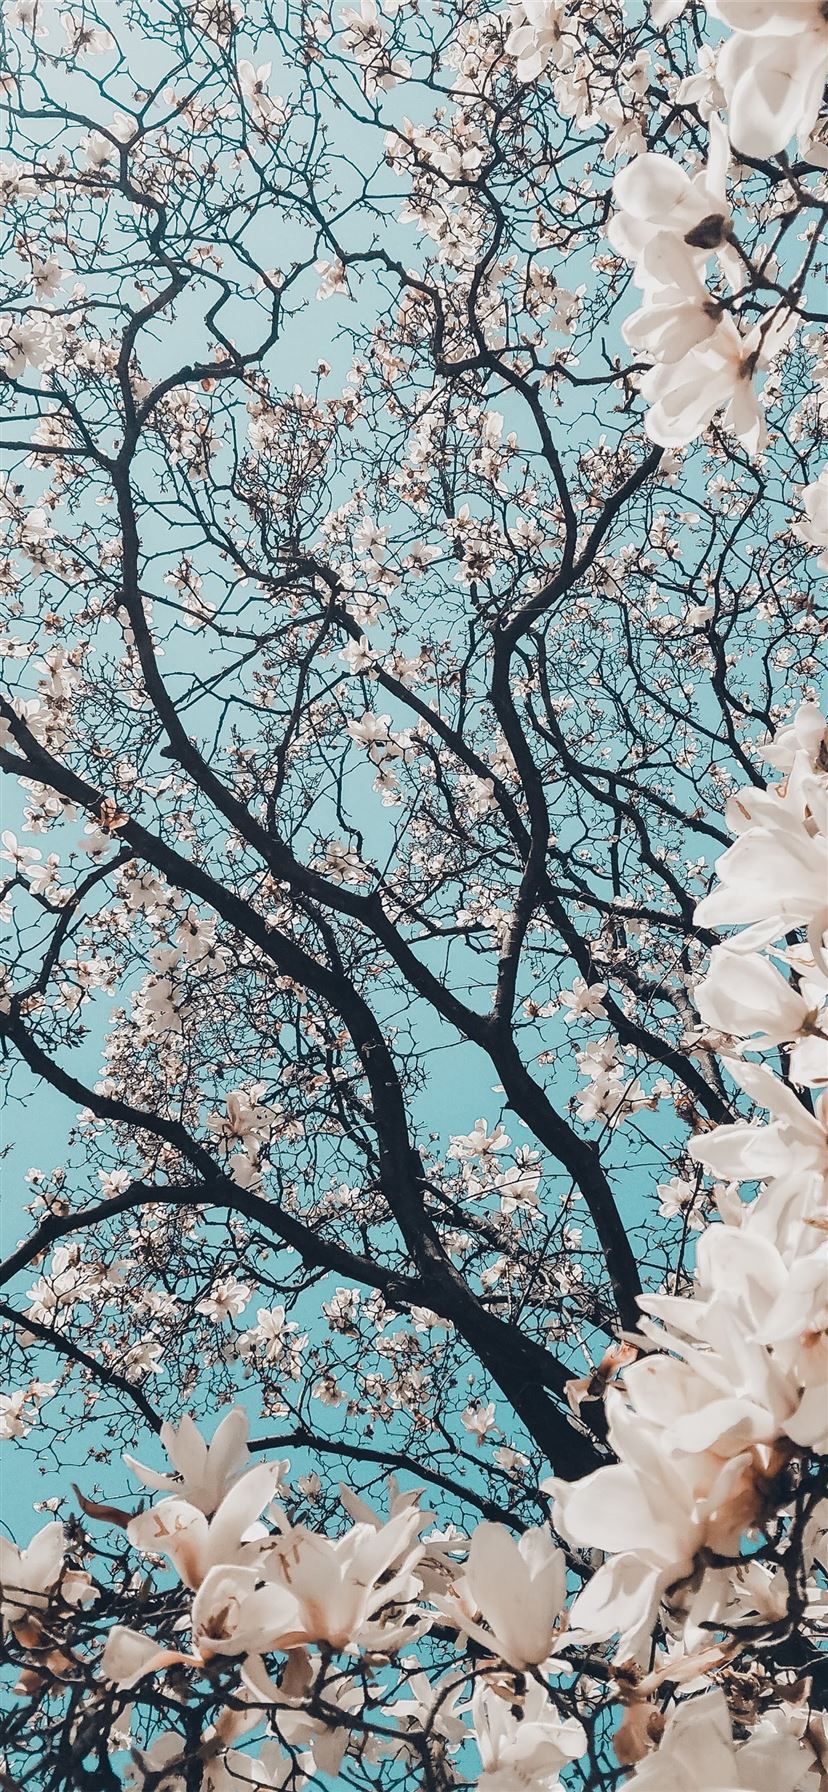 sakura tree in bloom iPhone 11 wallpaper 